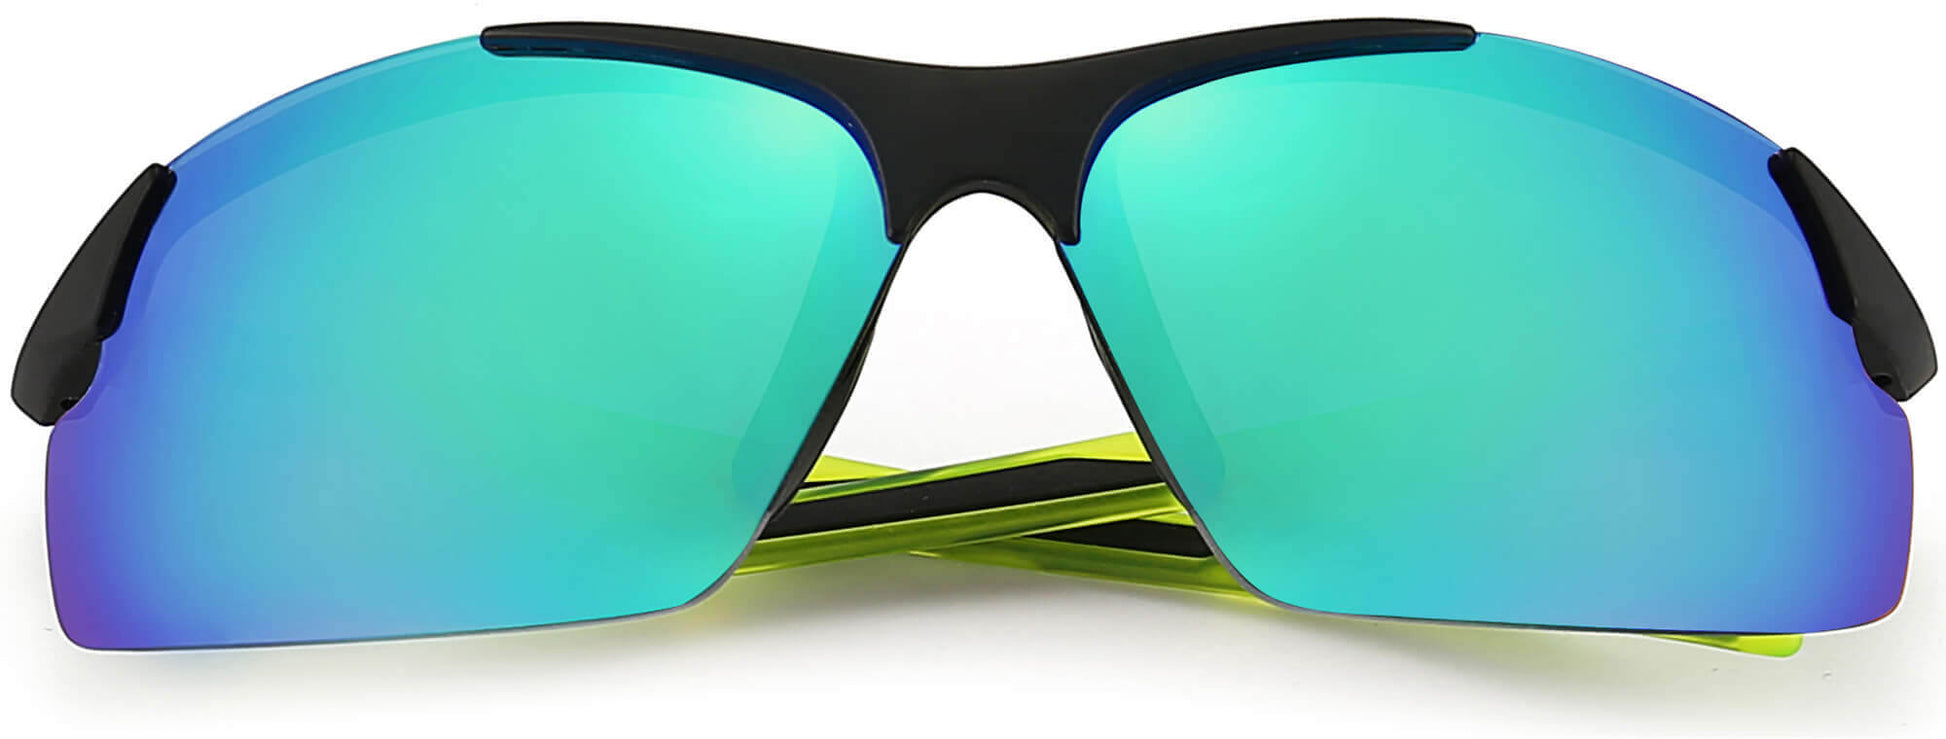 Jeshun Green Plastic Sunglasses from ANRRI